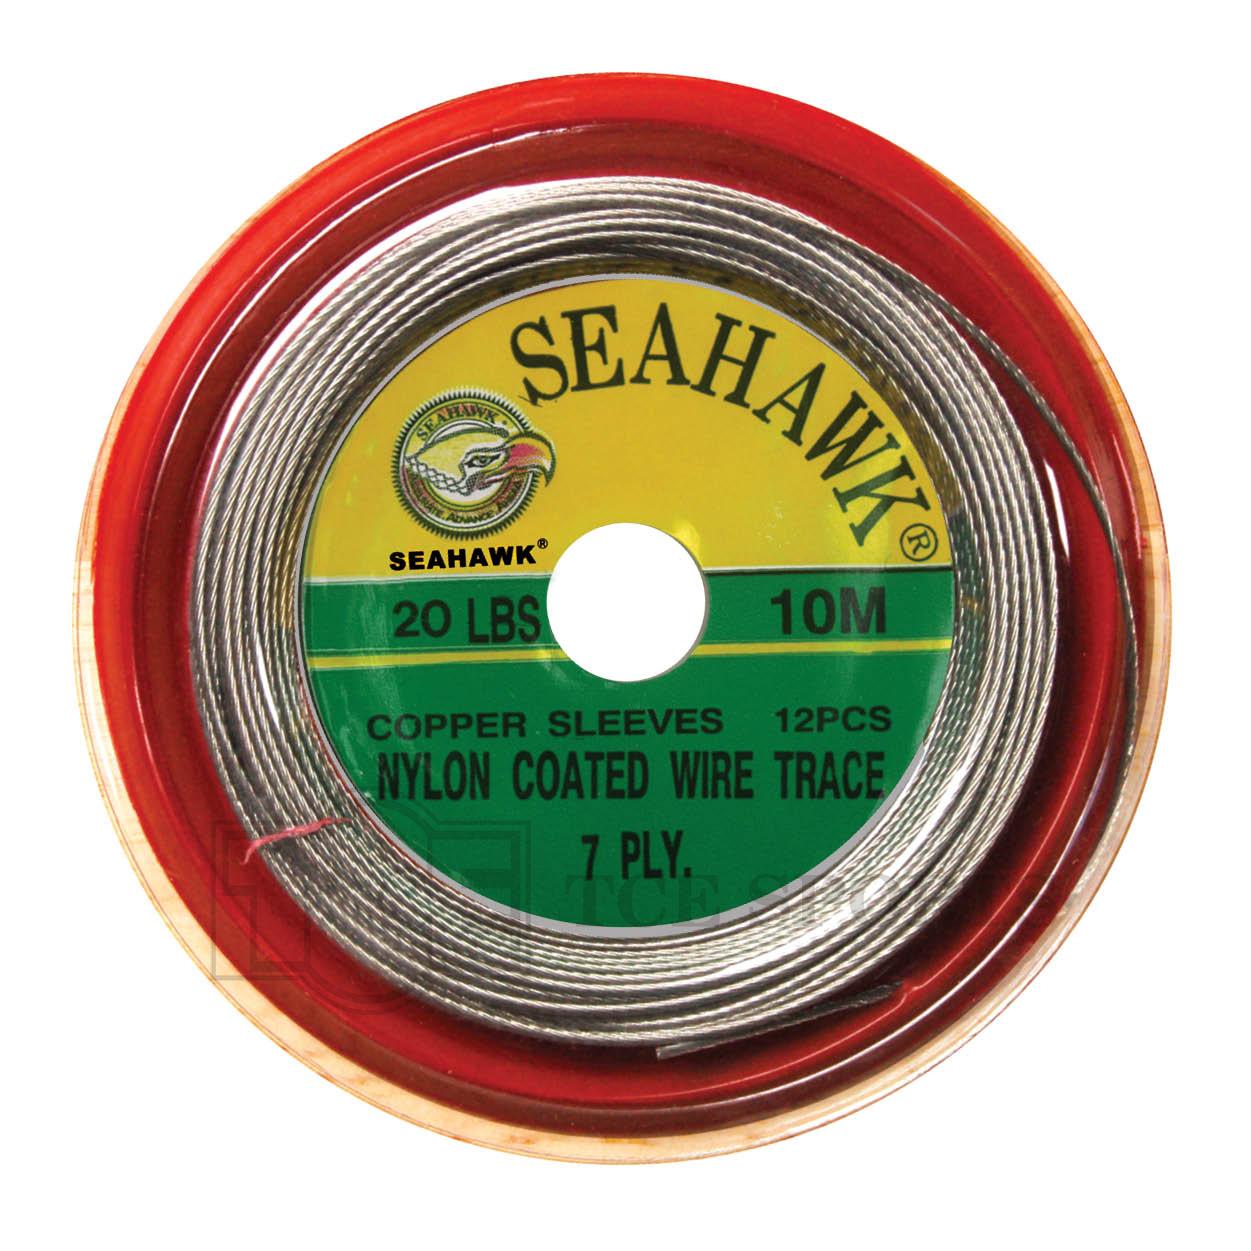 Seahawk - 10m Nylon Coated Wire - NCW 02